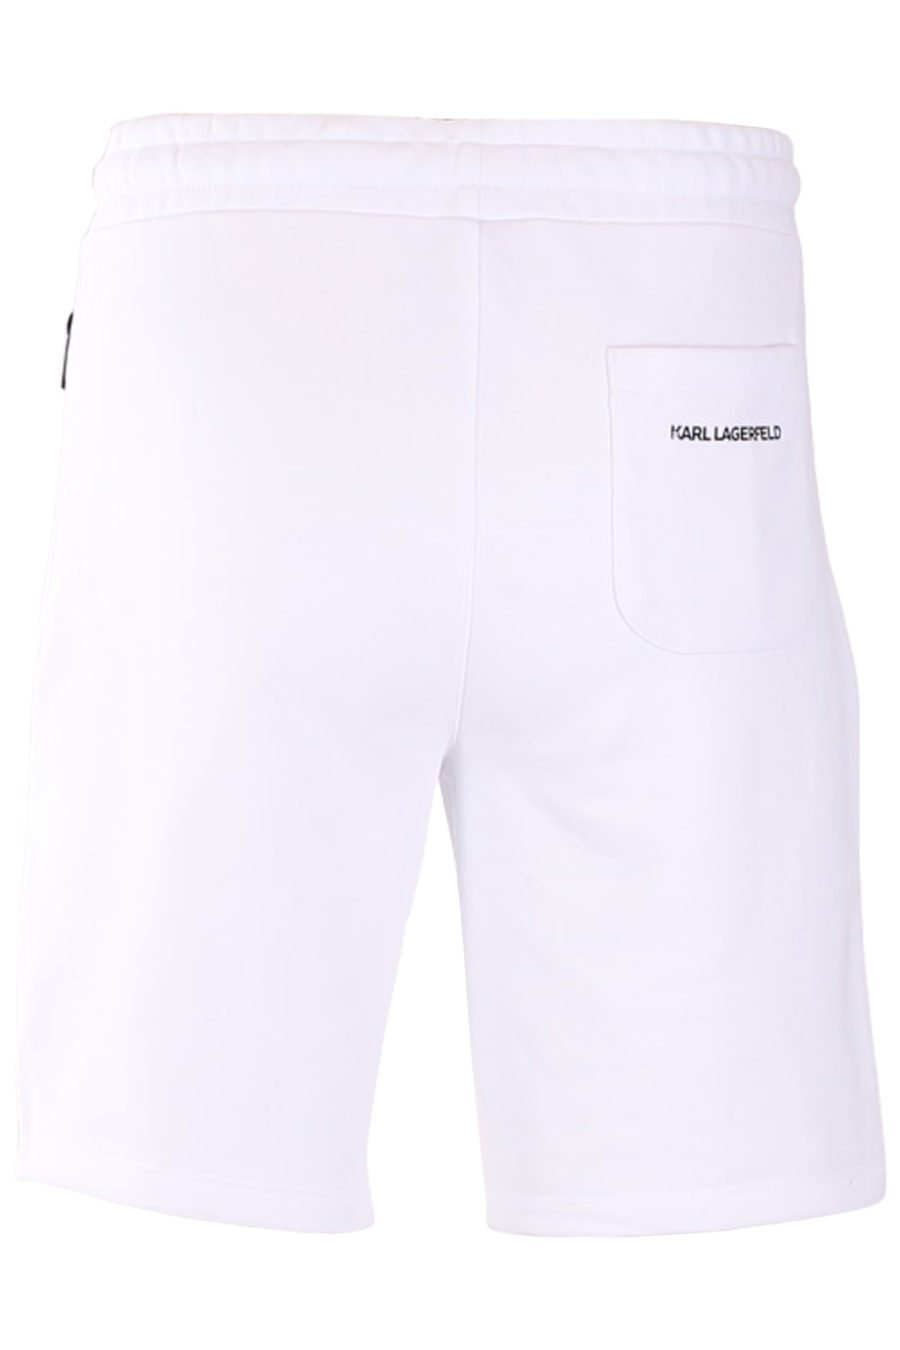 Weiße Shorts mit silbernem Logo - 19318bf8e2ffabda922f6e0e0e53de53a48c371b